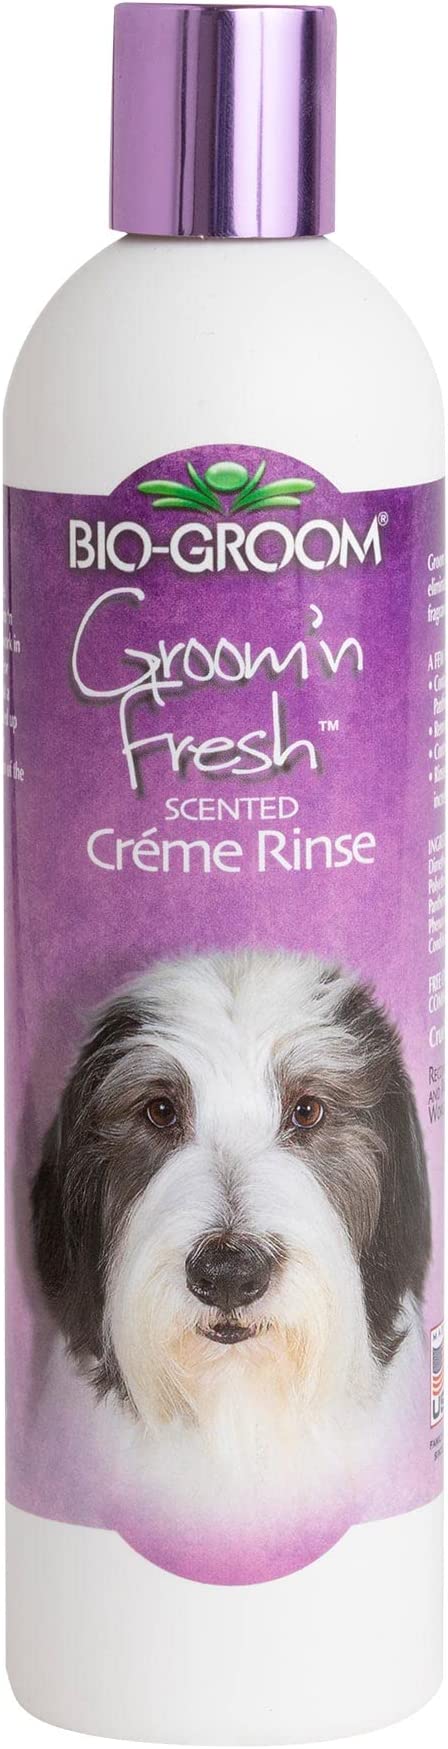 Bio-groom Groom N Fresh Creme Rinse Conditioner, 12-Ounce